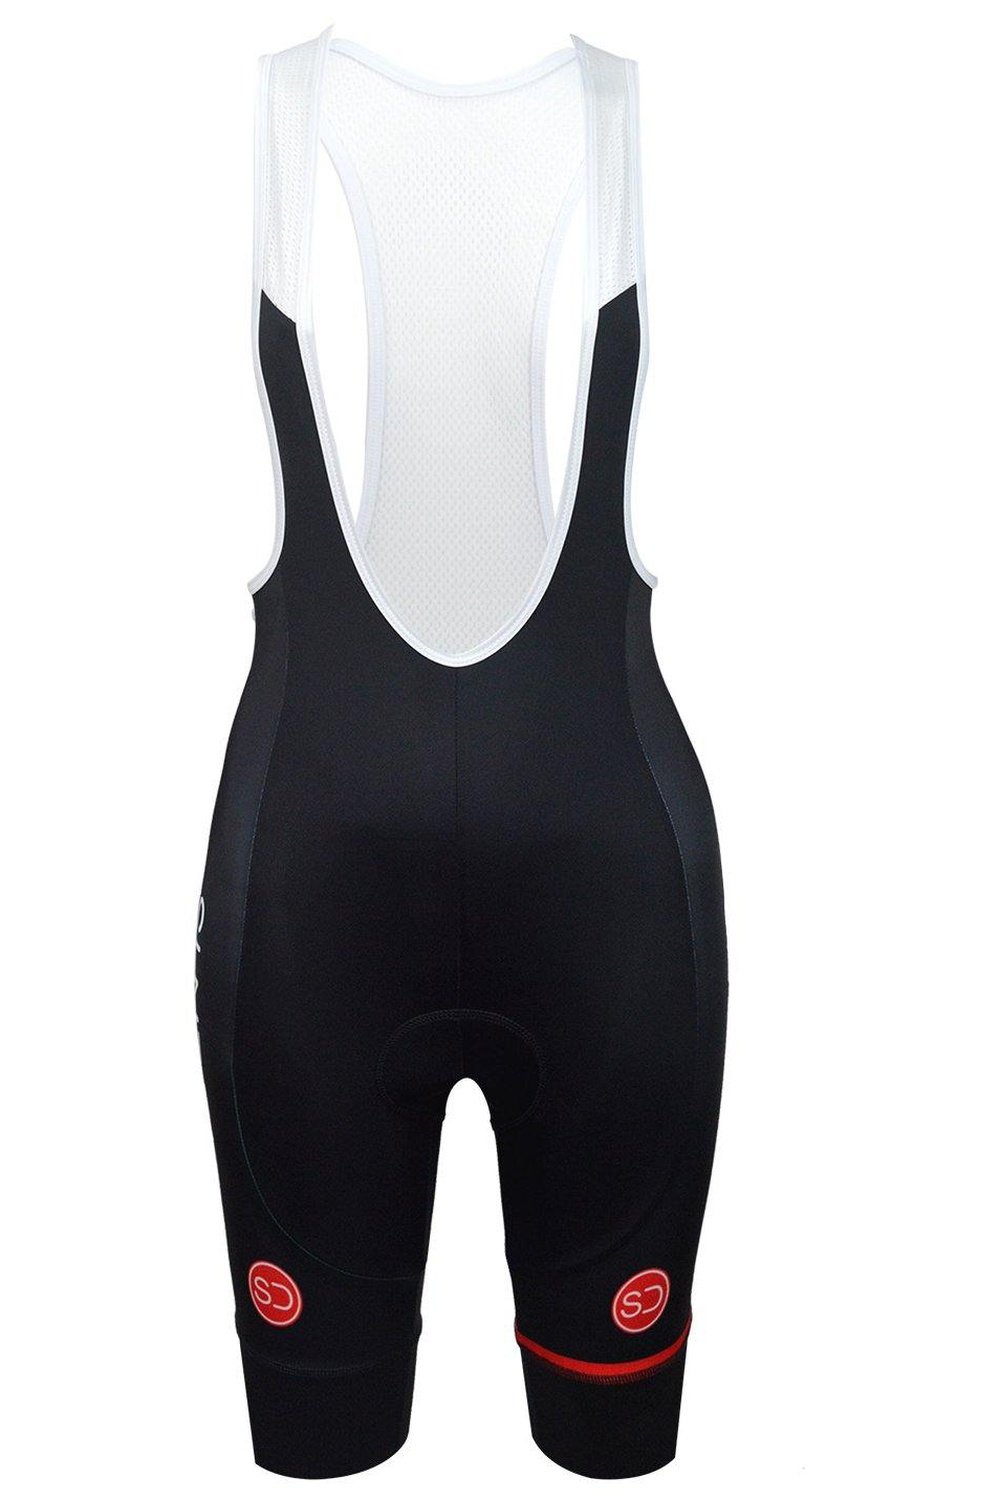 Sundried Rouleur Women's Training Bib Shorts Bib Shorts XS Black SD0125 XS Black Activewear